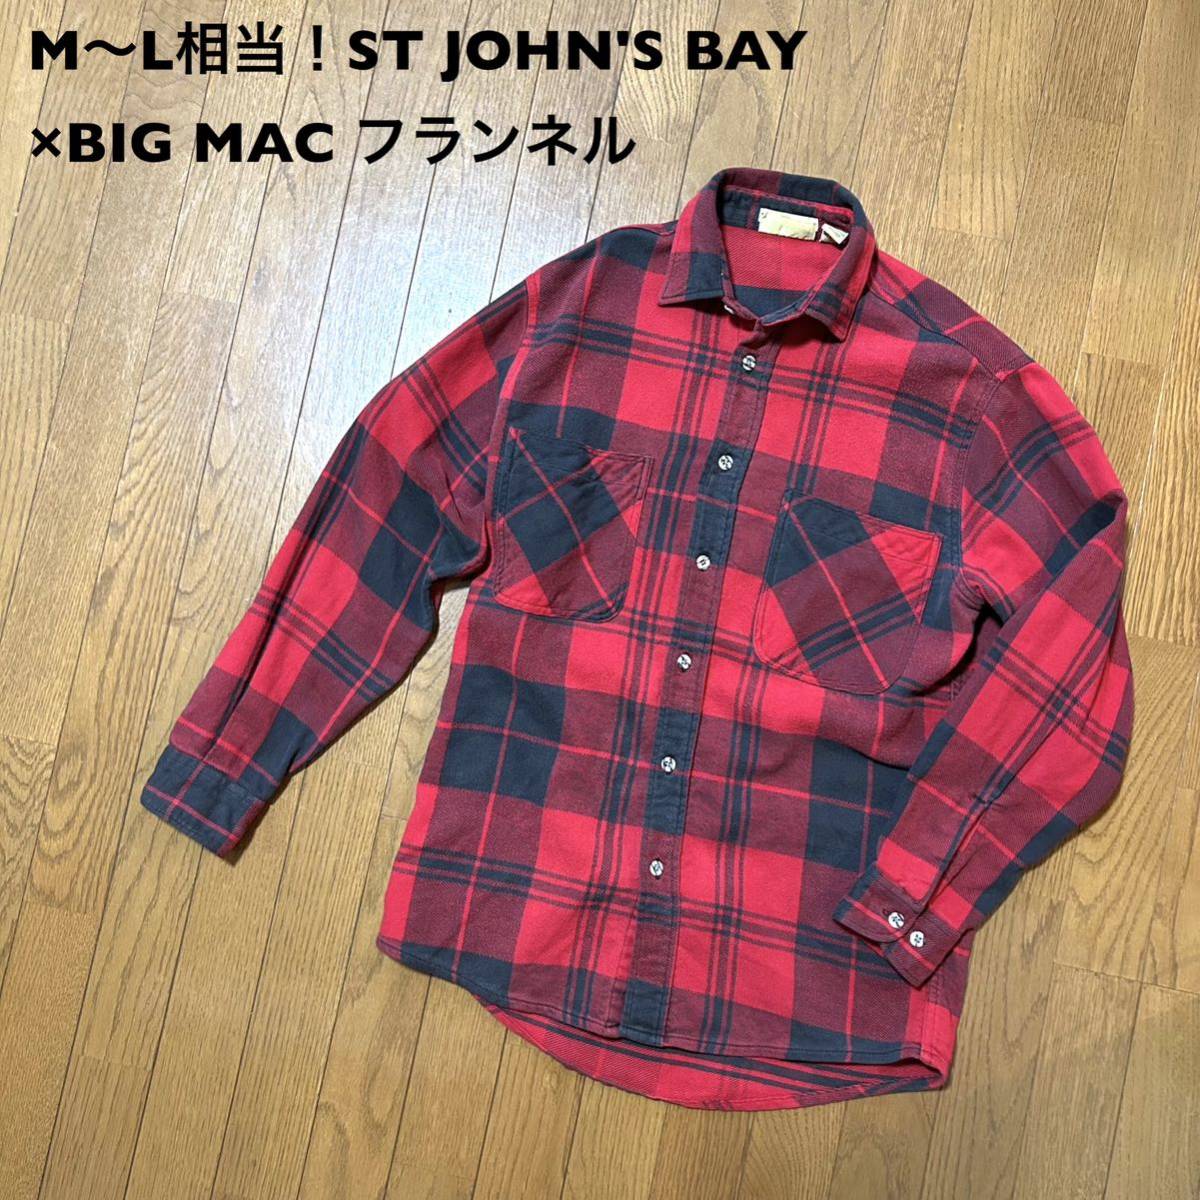 M〜L相当！ST JOHN'S BAY ×BIG MAC古着長袖ネルチェックシャツ セントジョンズベイ ビッグマック フランネル 要サイズ確認！